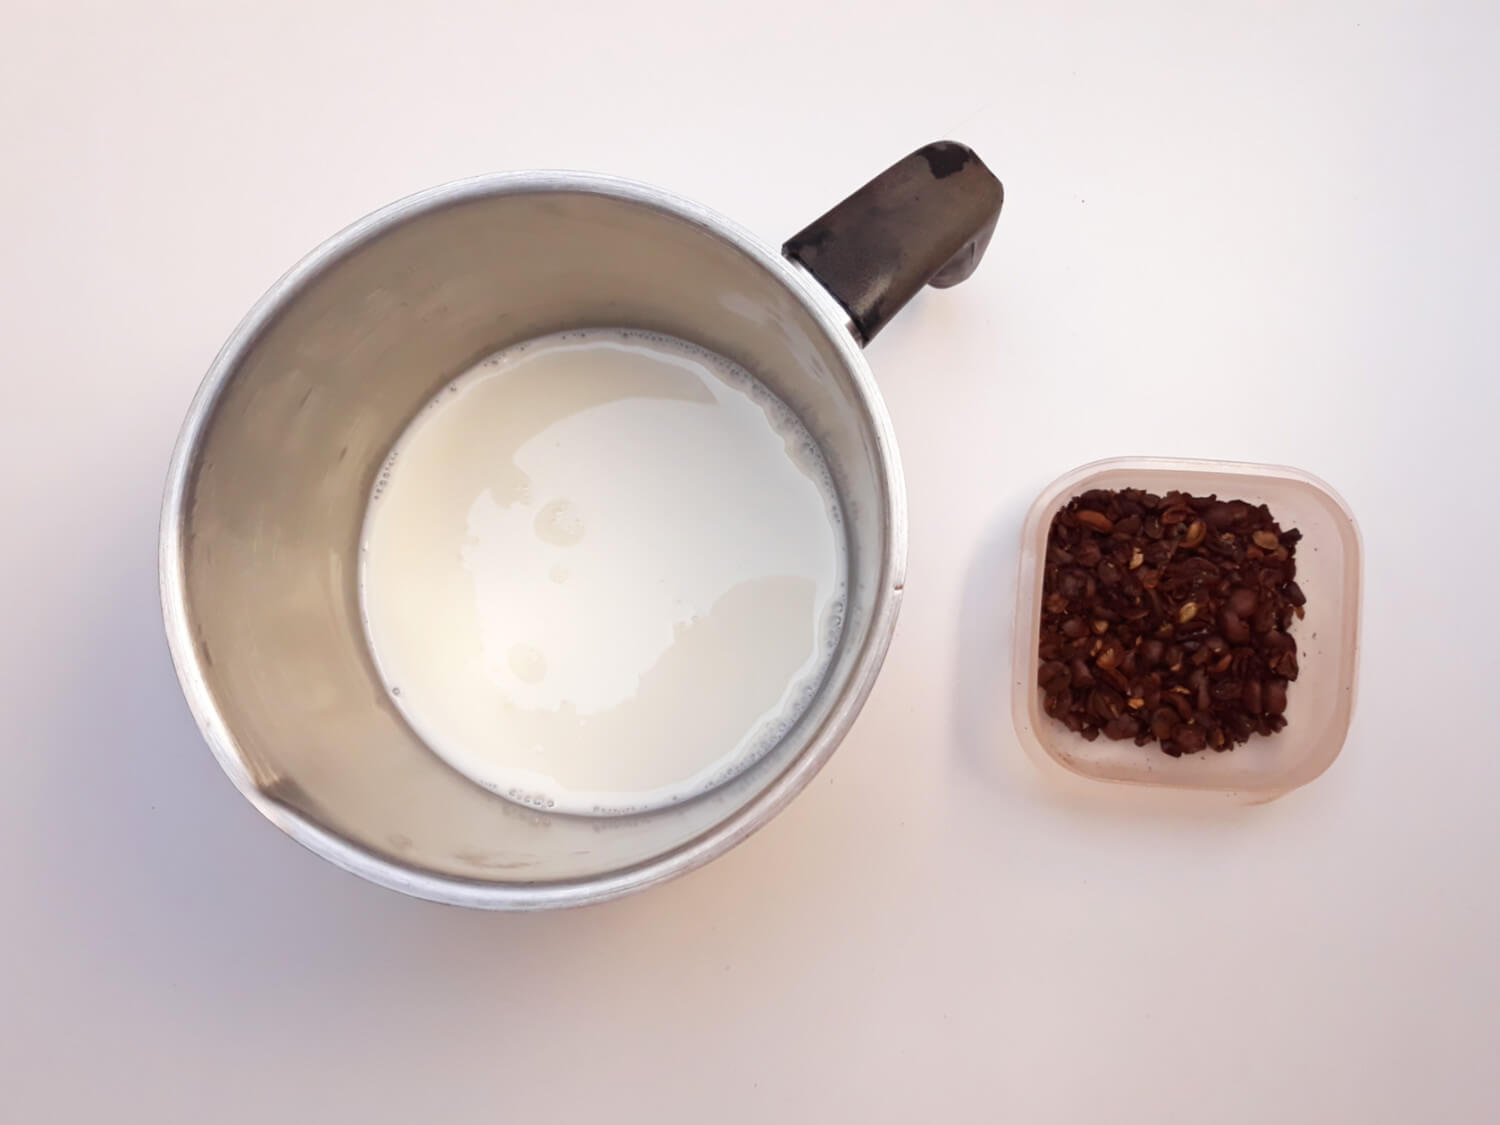 przygotowanie kremu kawowego namelaka, kawa, mleko, garnek